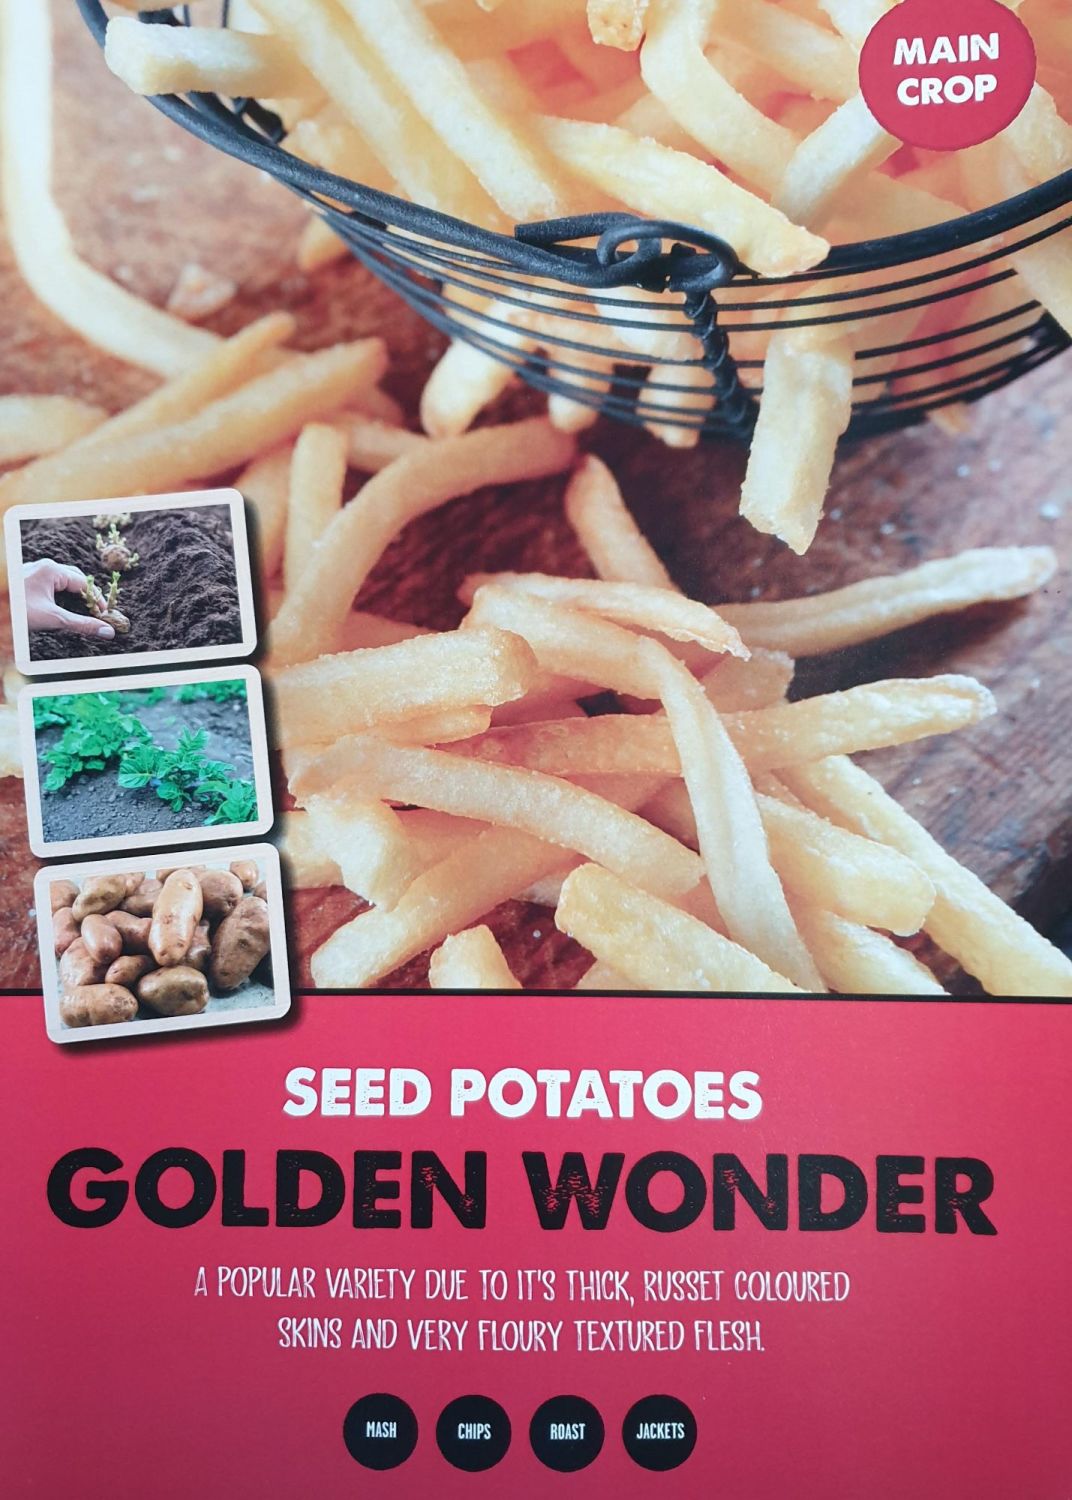 GOLDEN WONDER seed potatoes main crop